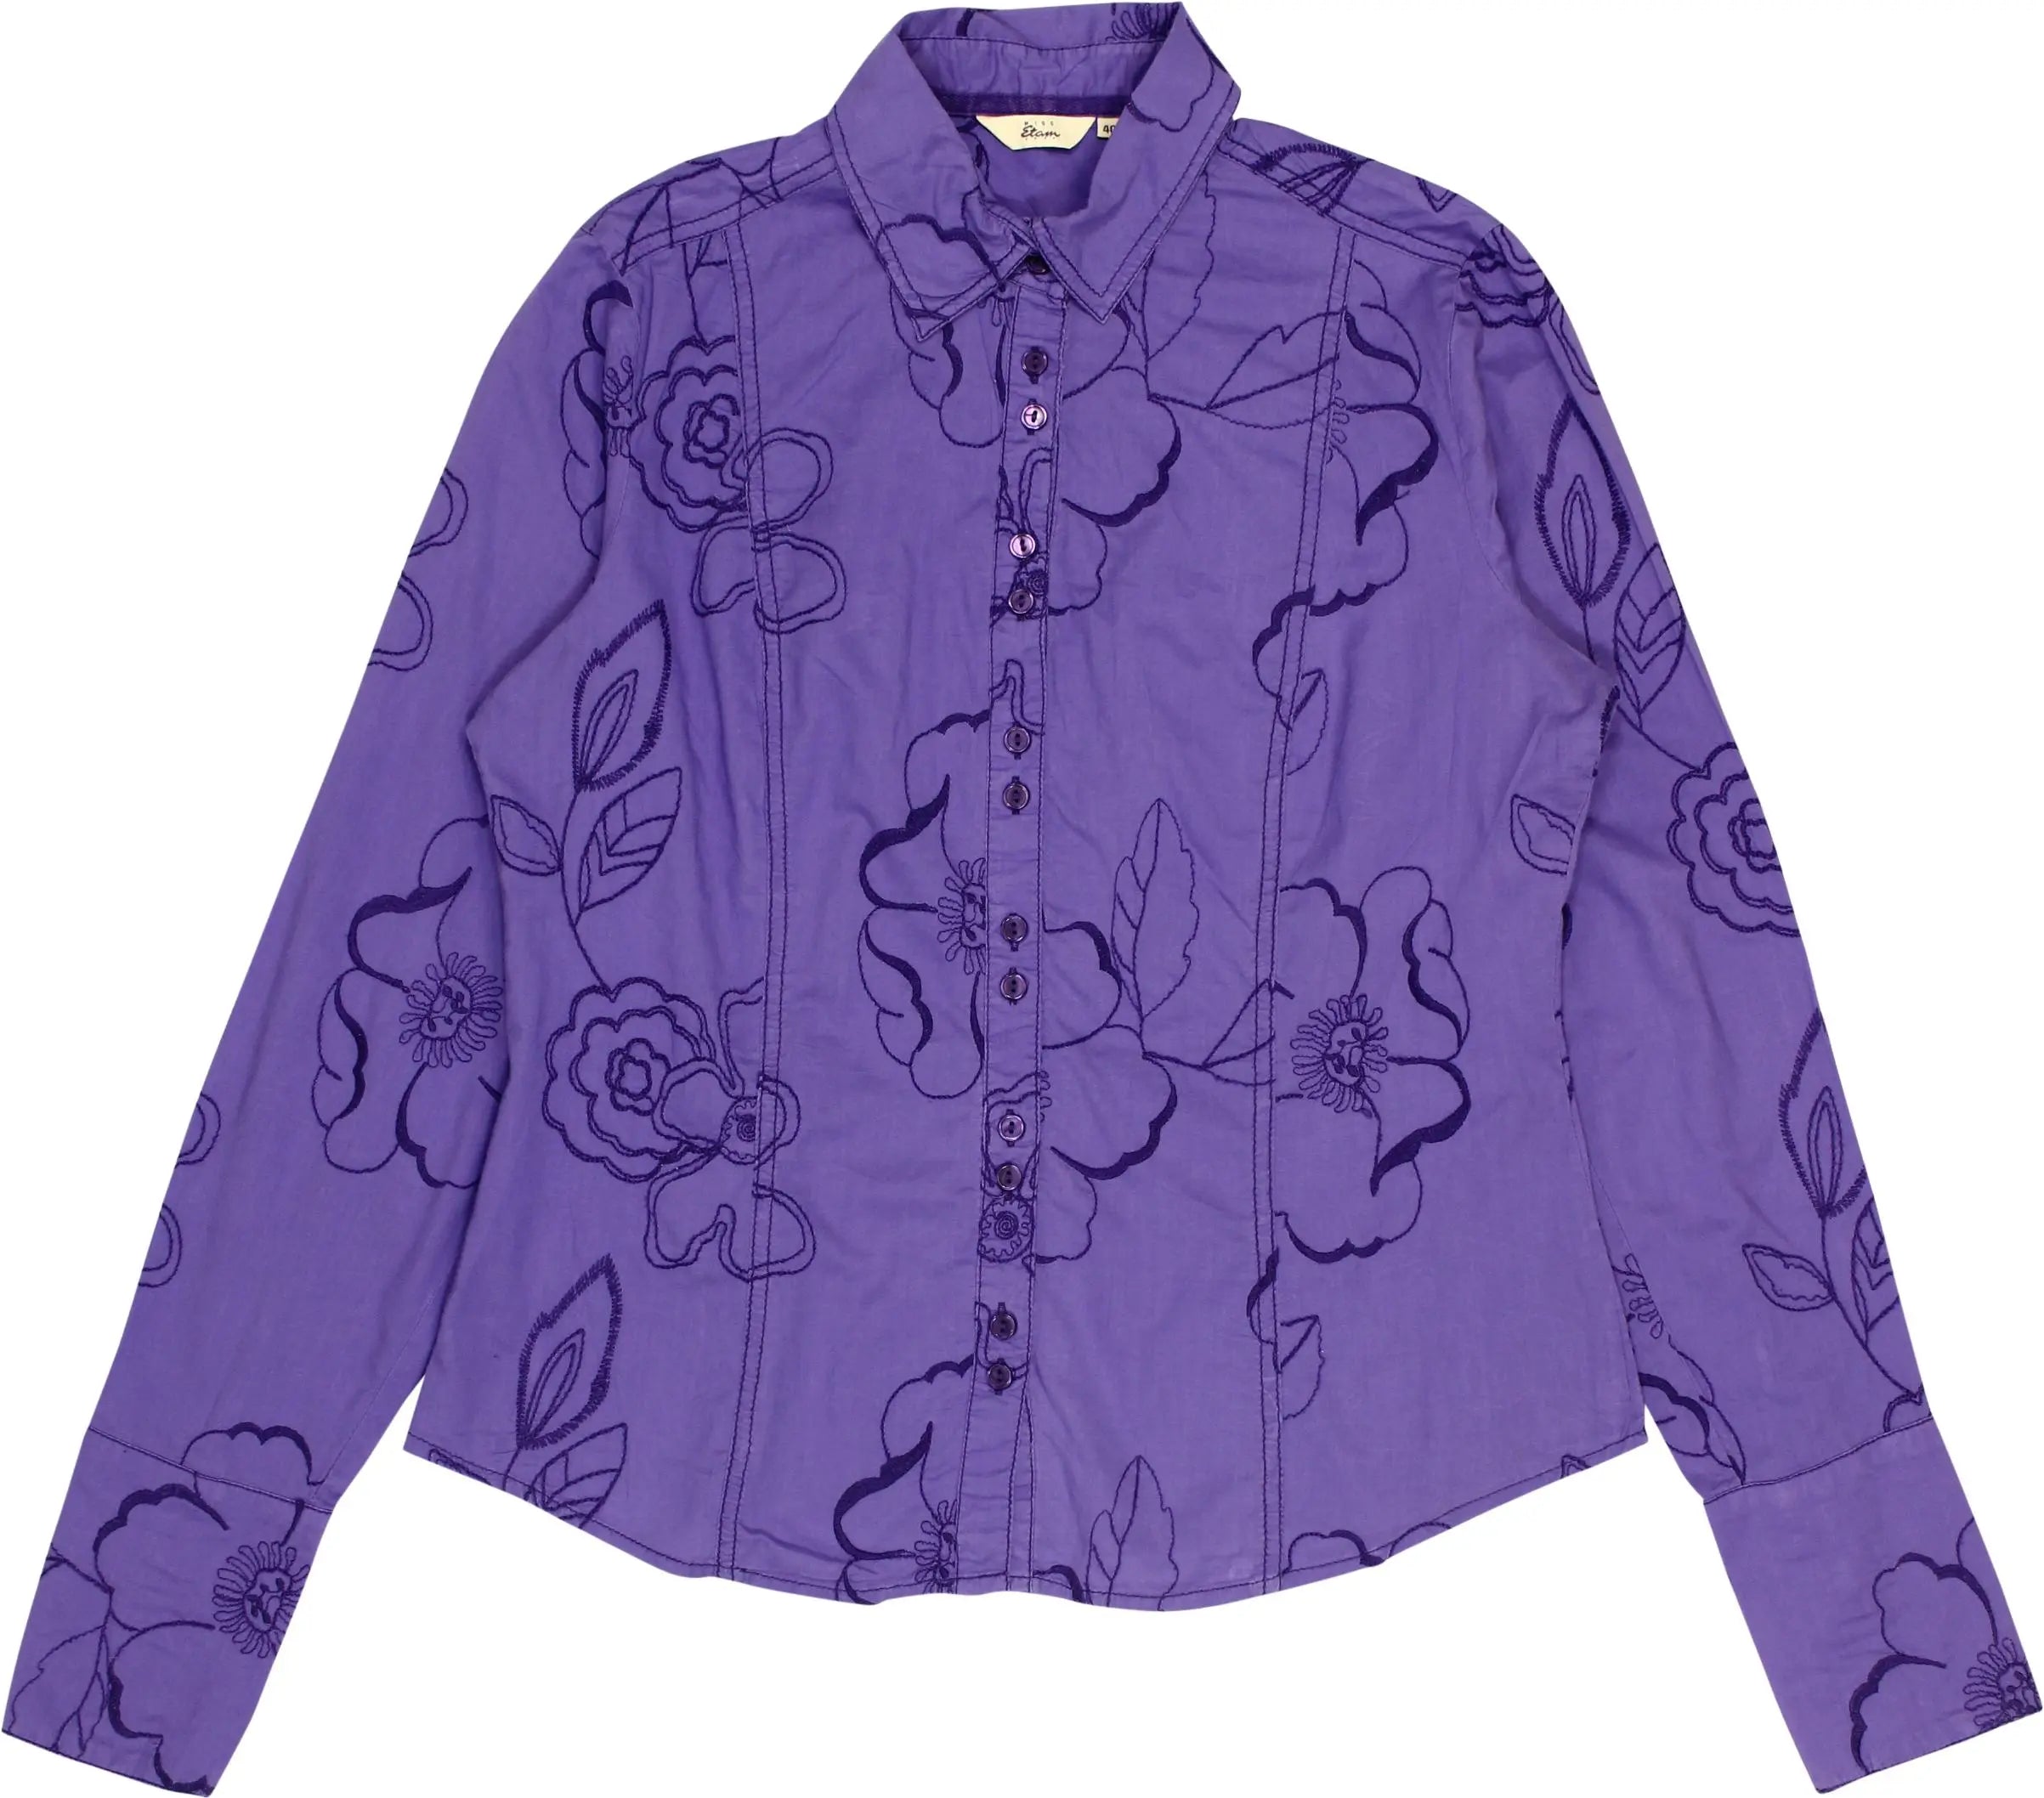 Miss Etam - Purple Shirt- ThriftTale.com - Vintage and second handclothing